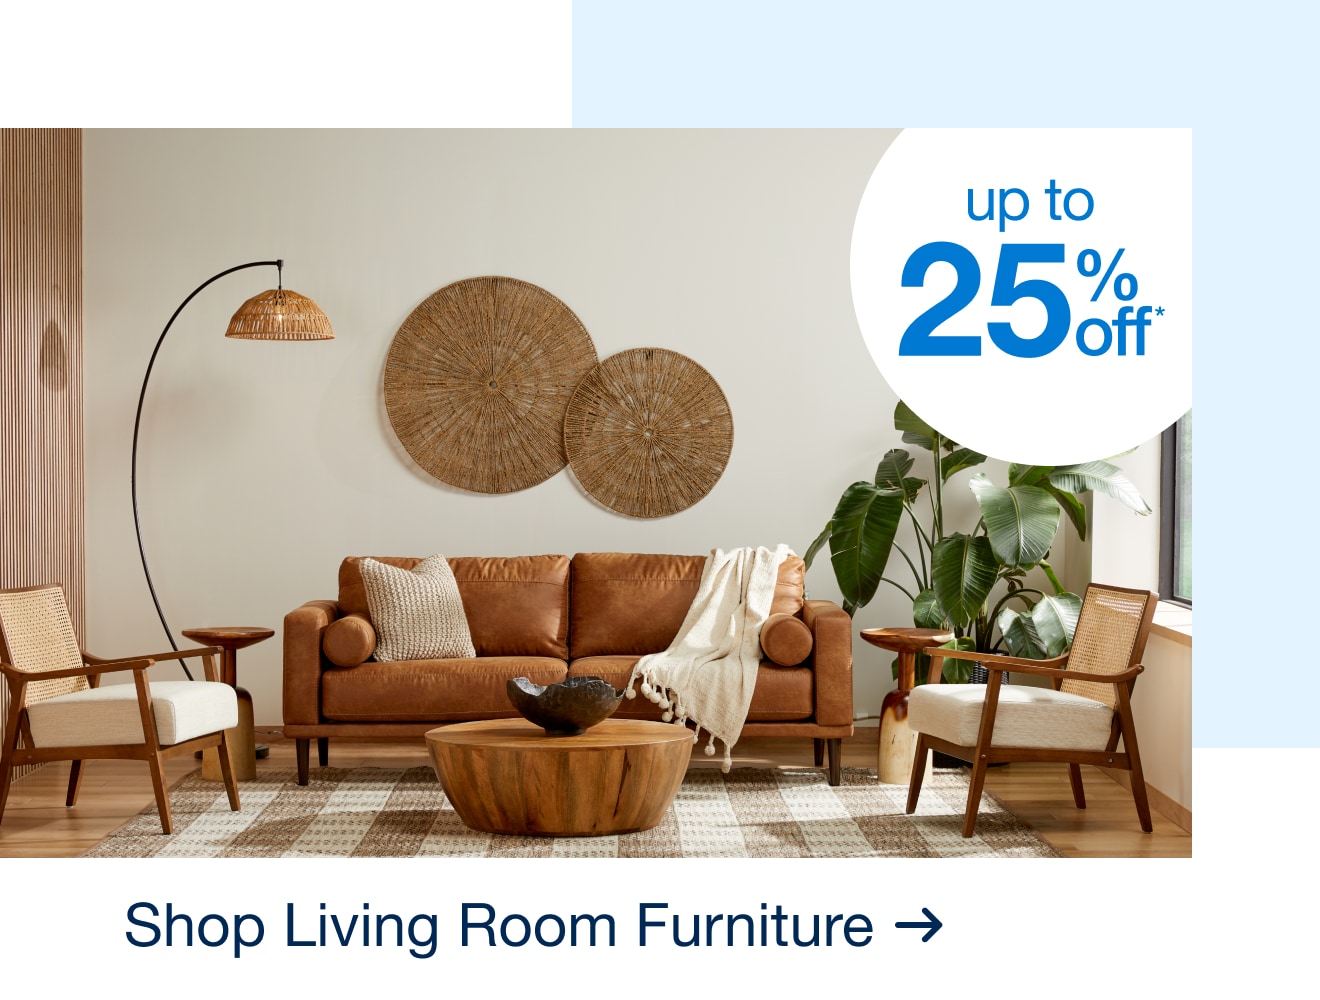 Up to 25% off - Shop Living Room Furniture